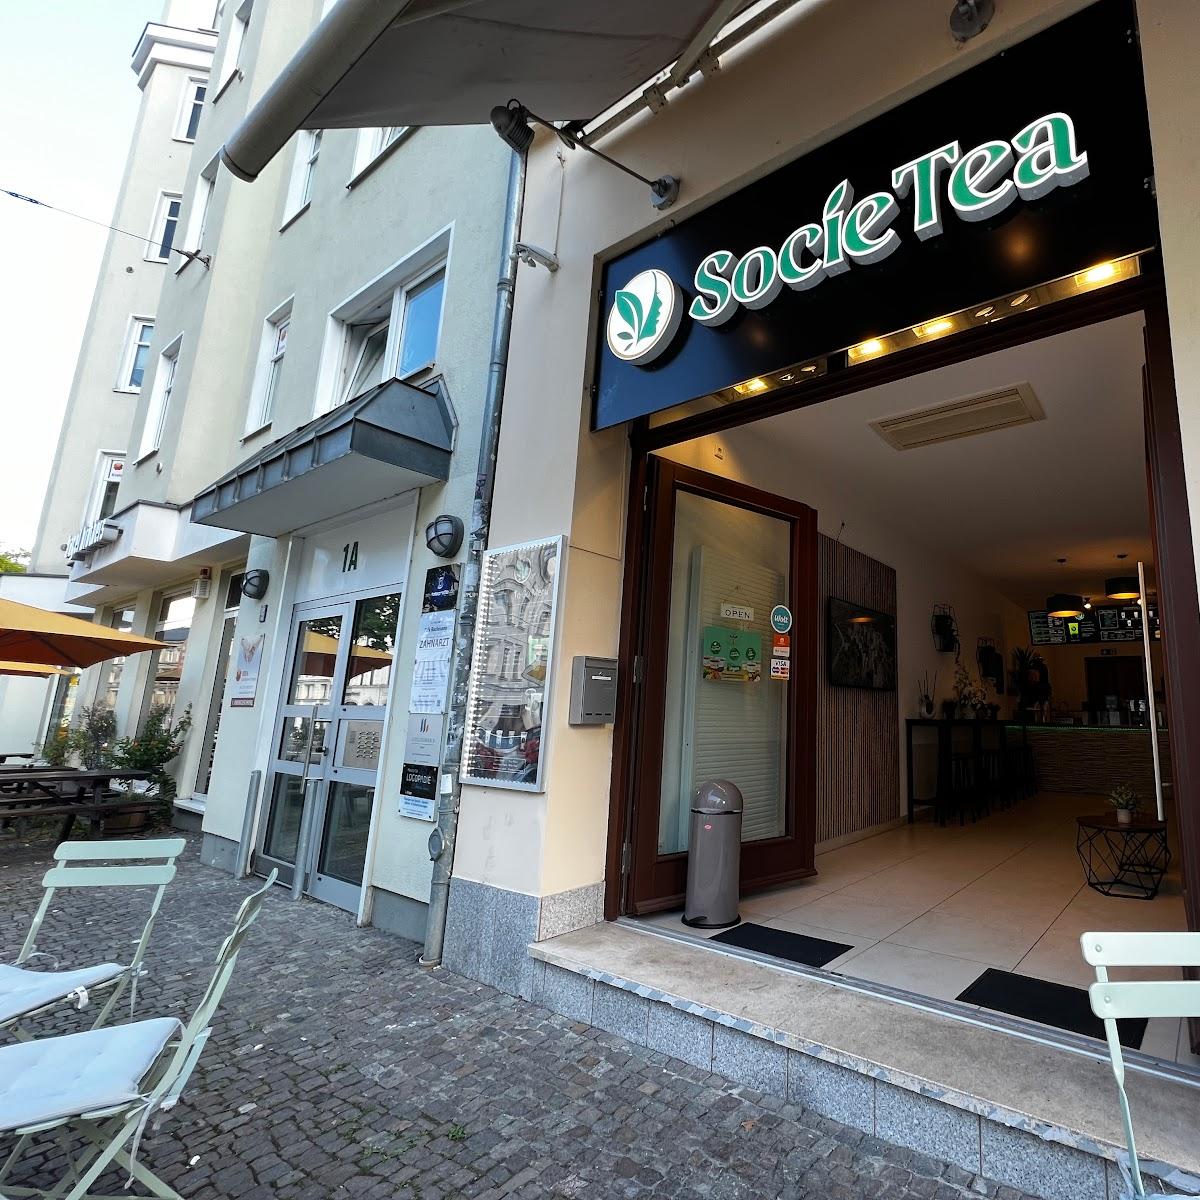 Restaurant "SocieTea" in Leipzig